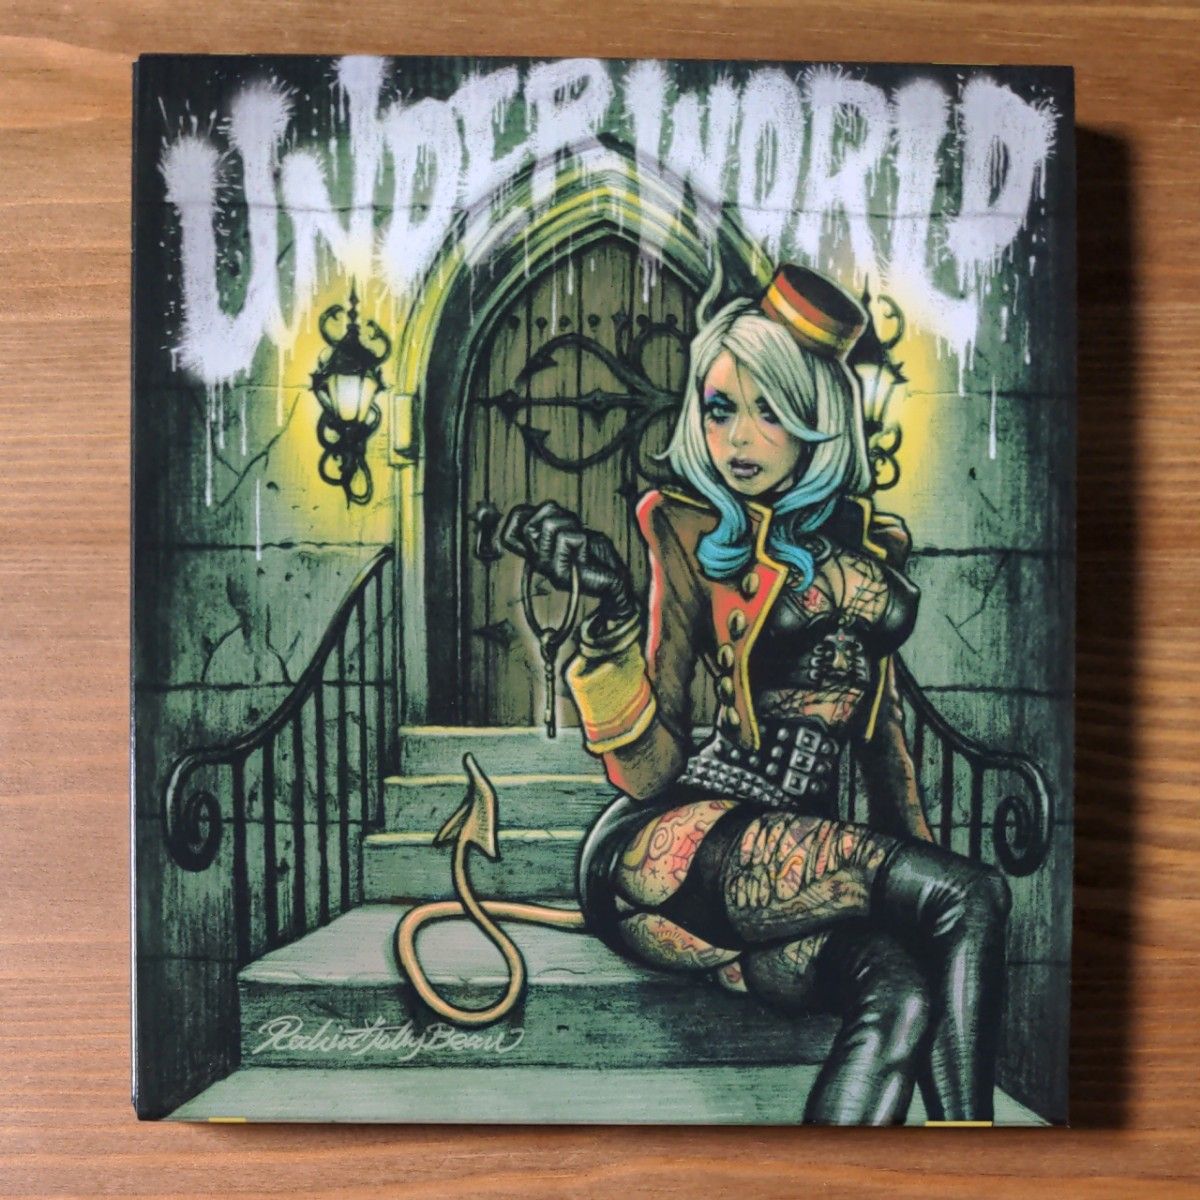 UNDERWORLD (初回限定盤A) (Blu-ray付)